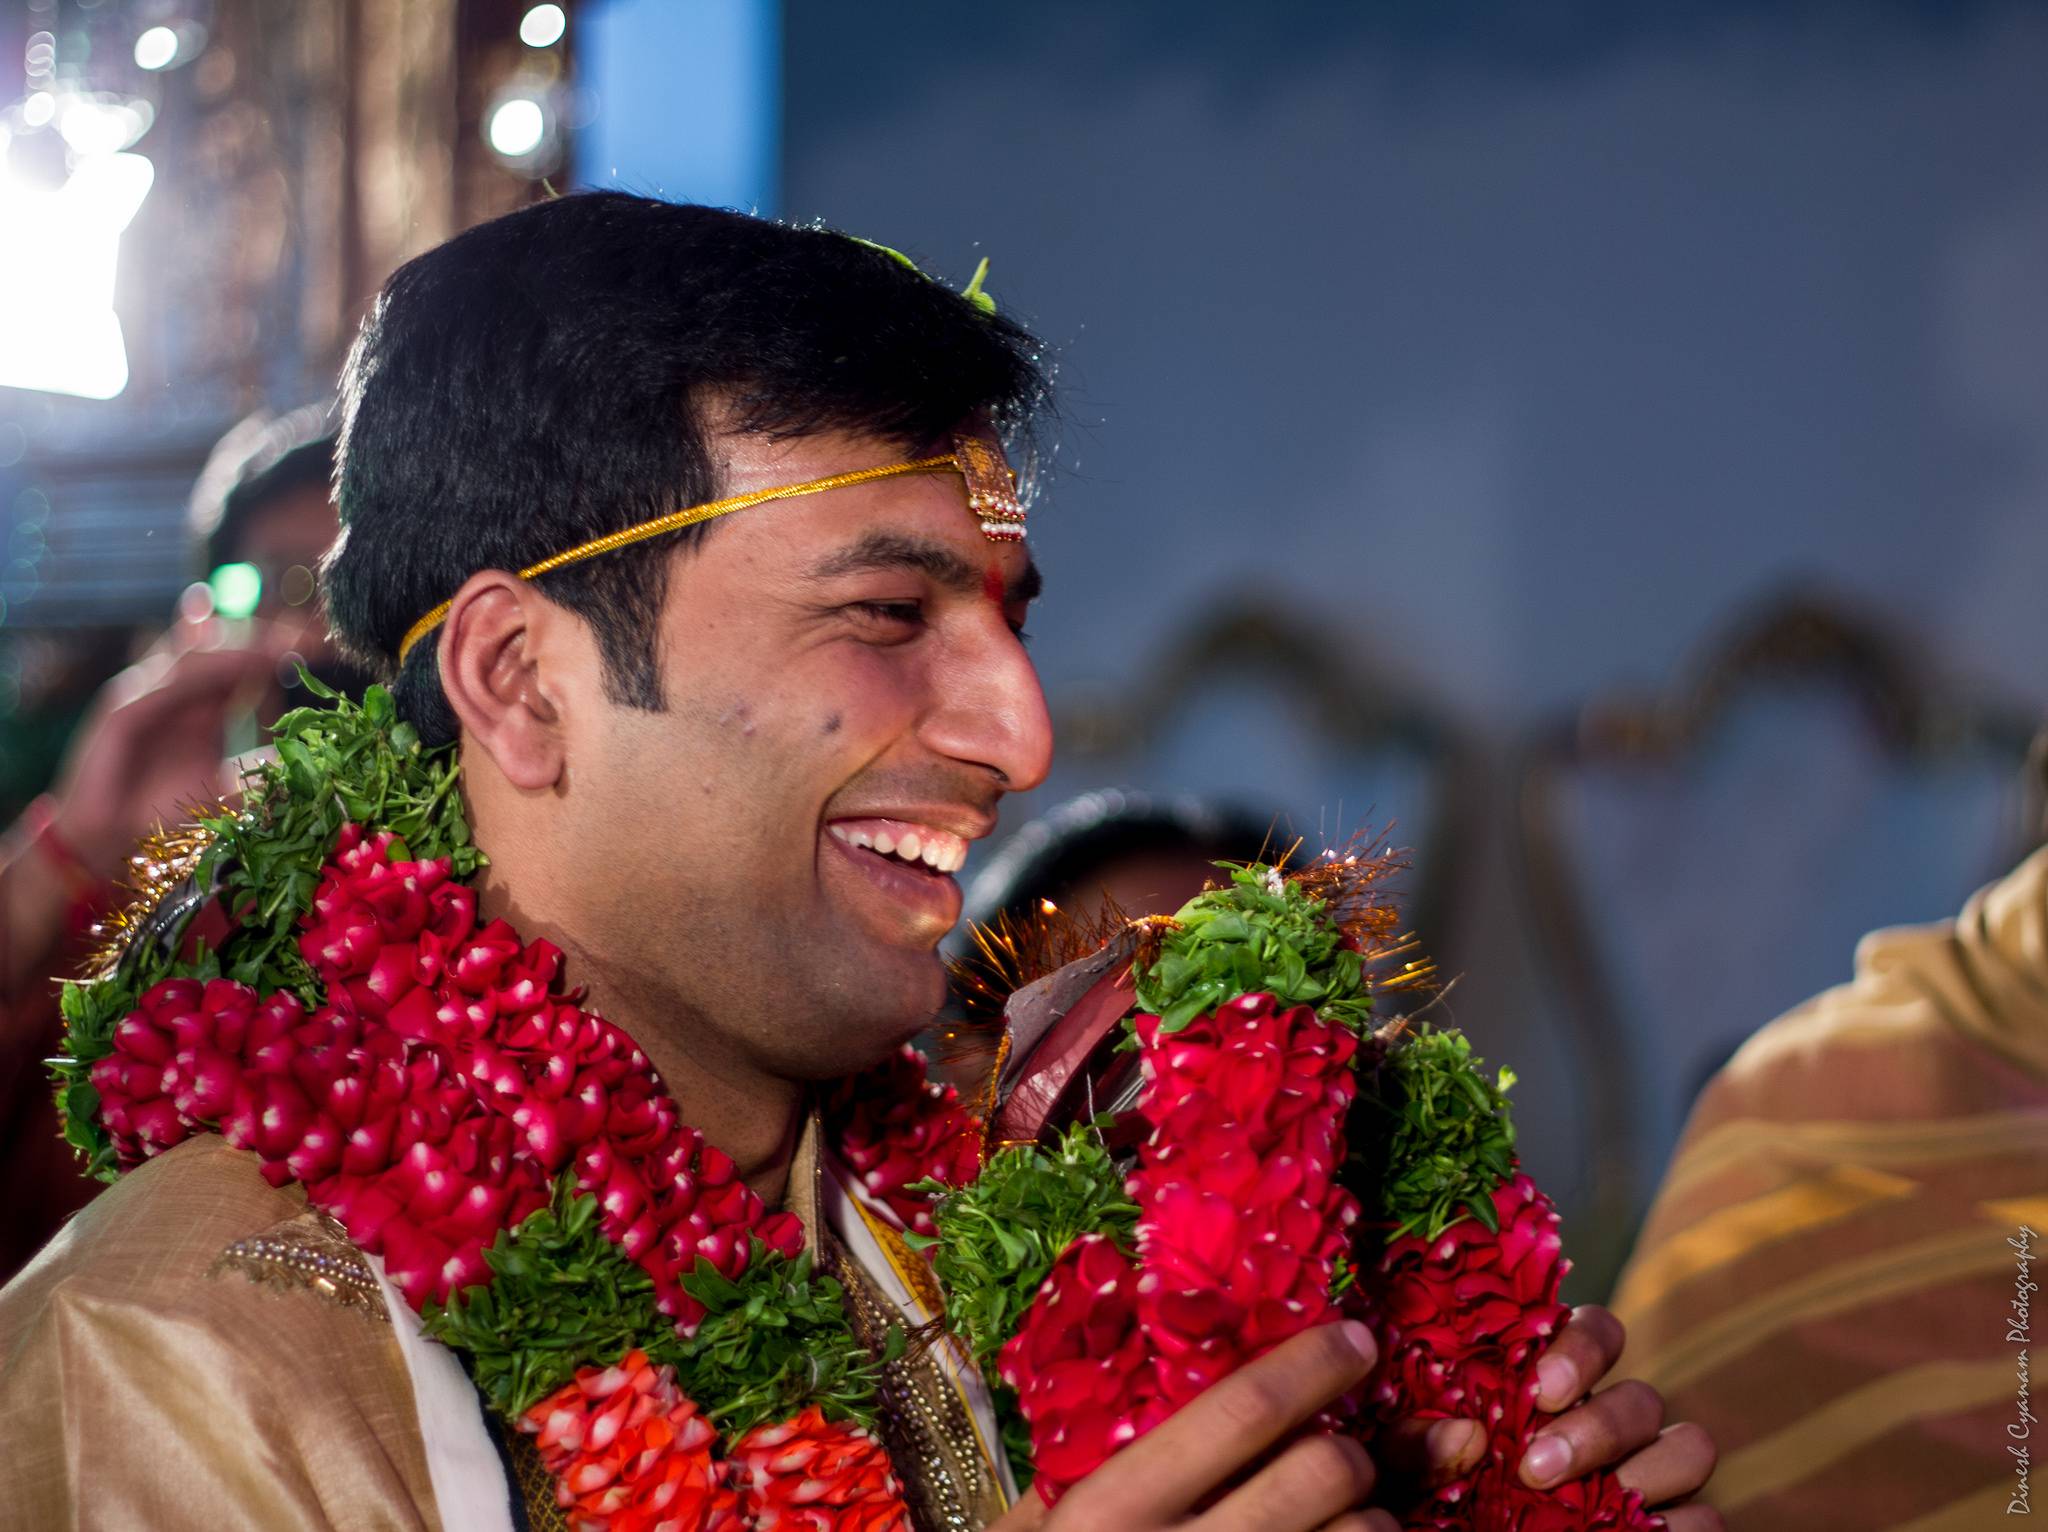 Uber is cashing in on Indian weddings